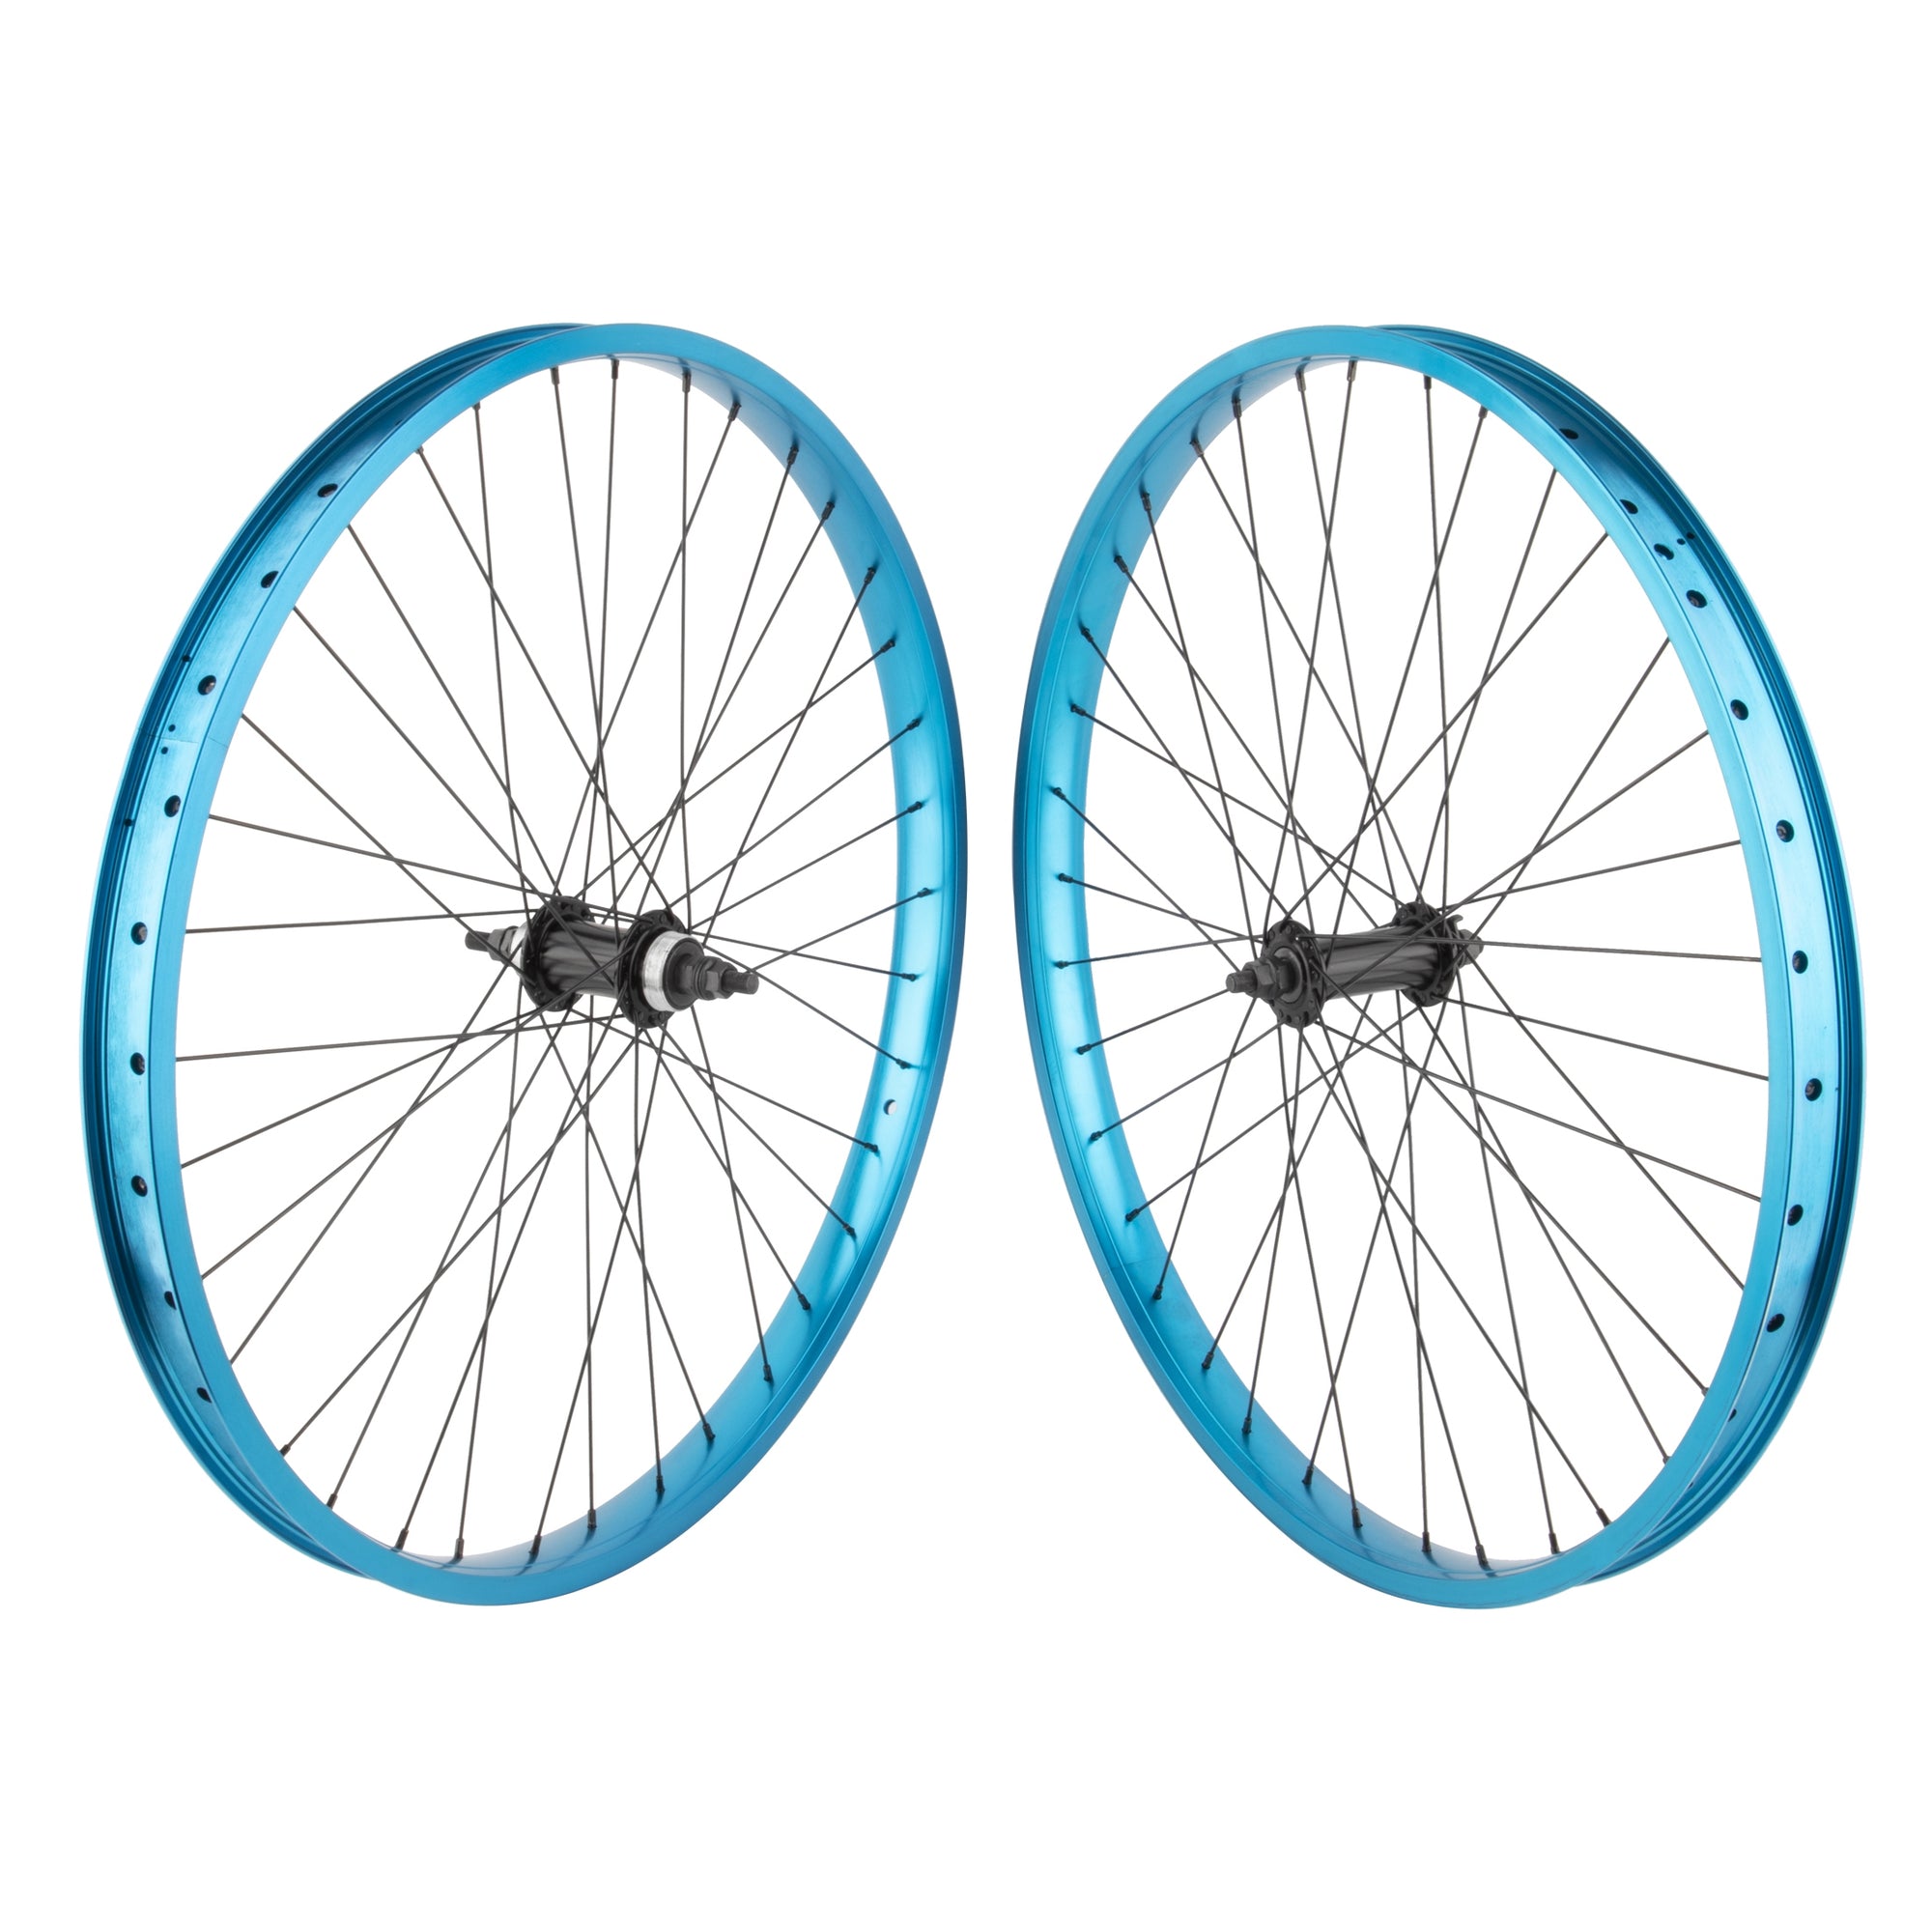 26" SE Racing Blocks Flyer Wheelset - Pair - 36H - Double Wall - Freewheel - Blue